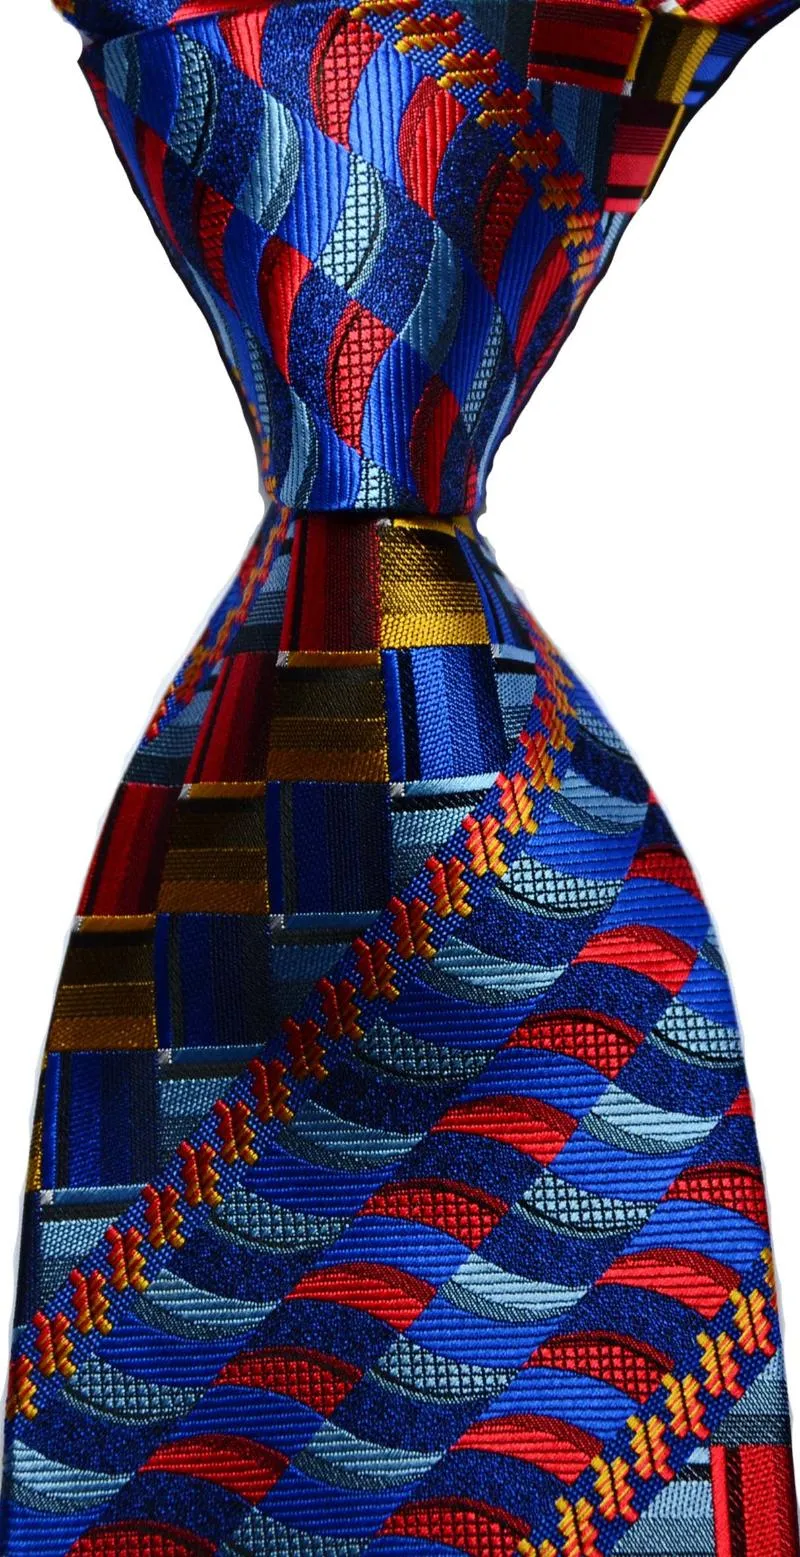 Bow Ties Men's Plaid Tie 100% Silk Blue Red Green Jacquard Party Wedding Woven Fashion Designers Necktie